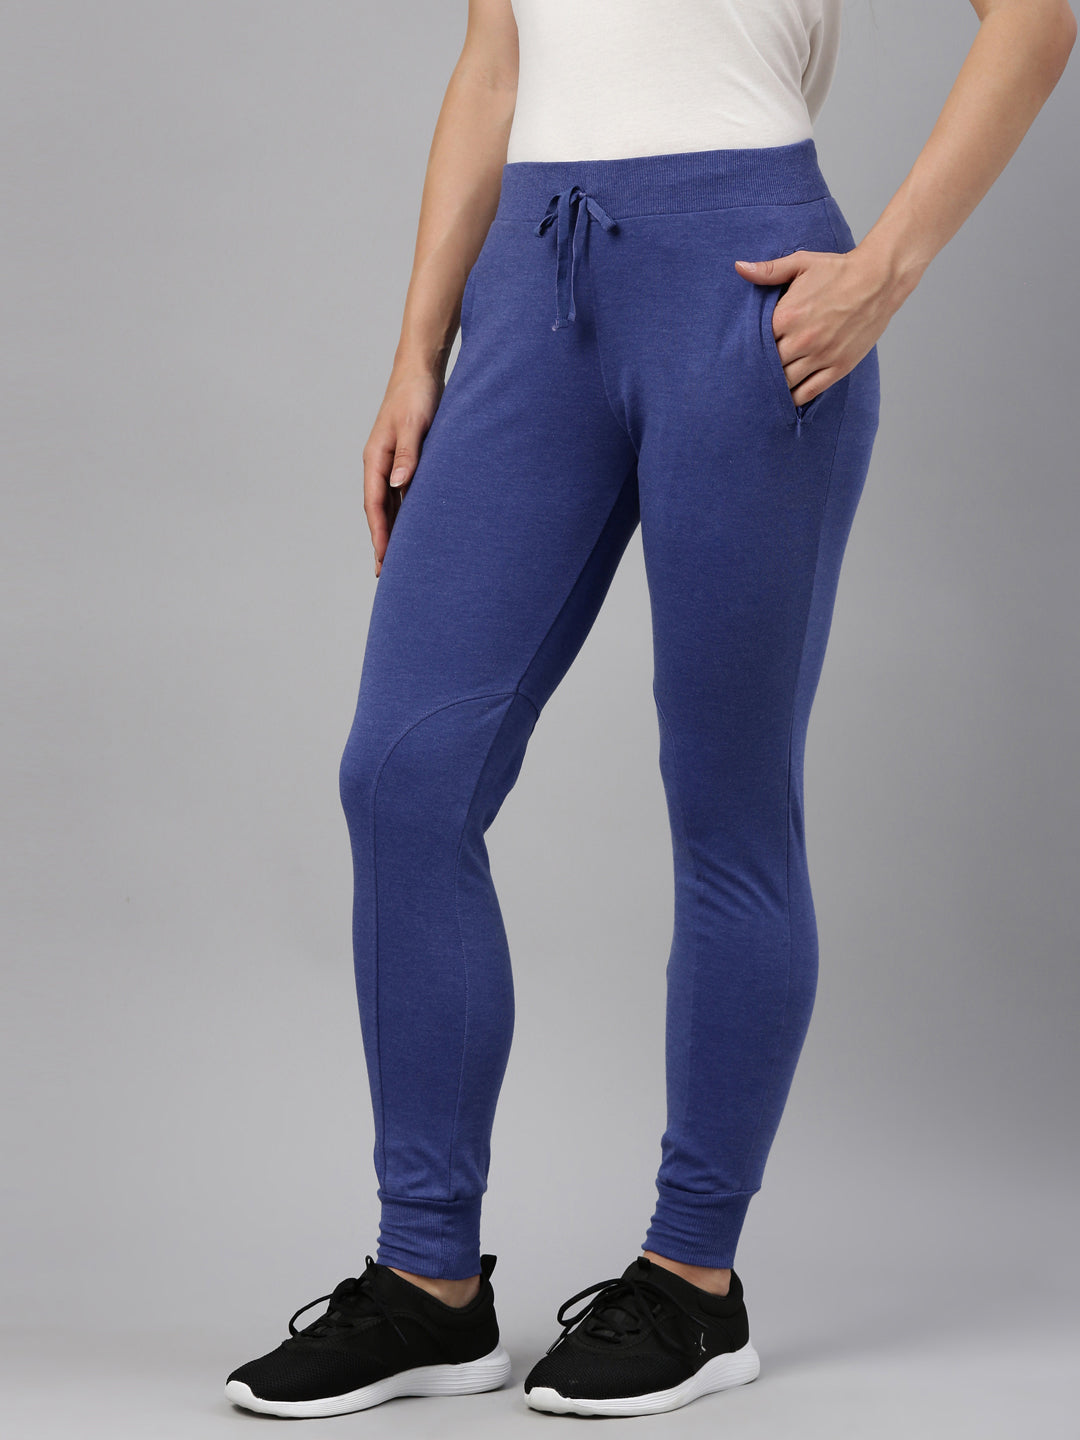 Womens Narrow Bottom Joggers With Side Pockets - Blue Melange